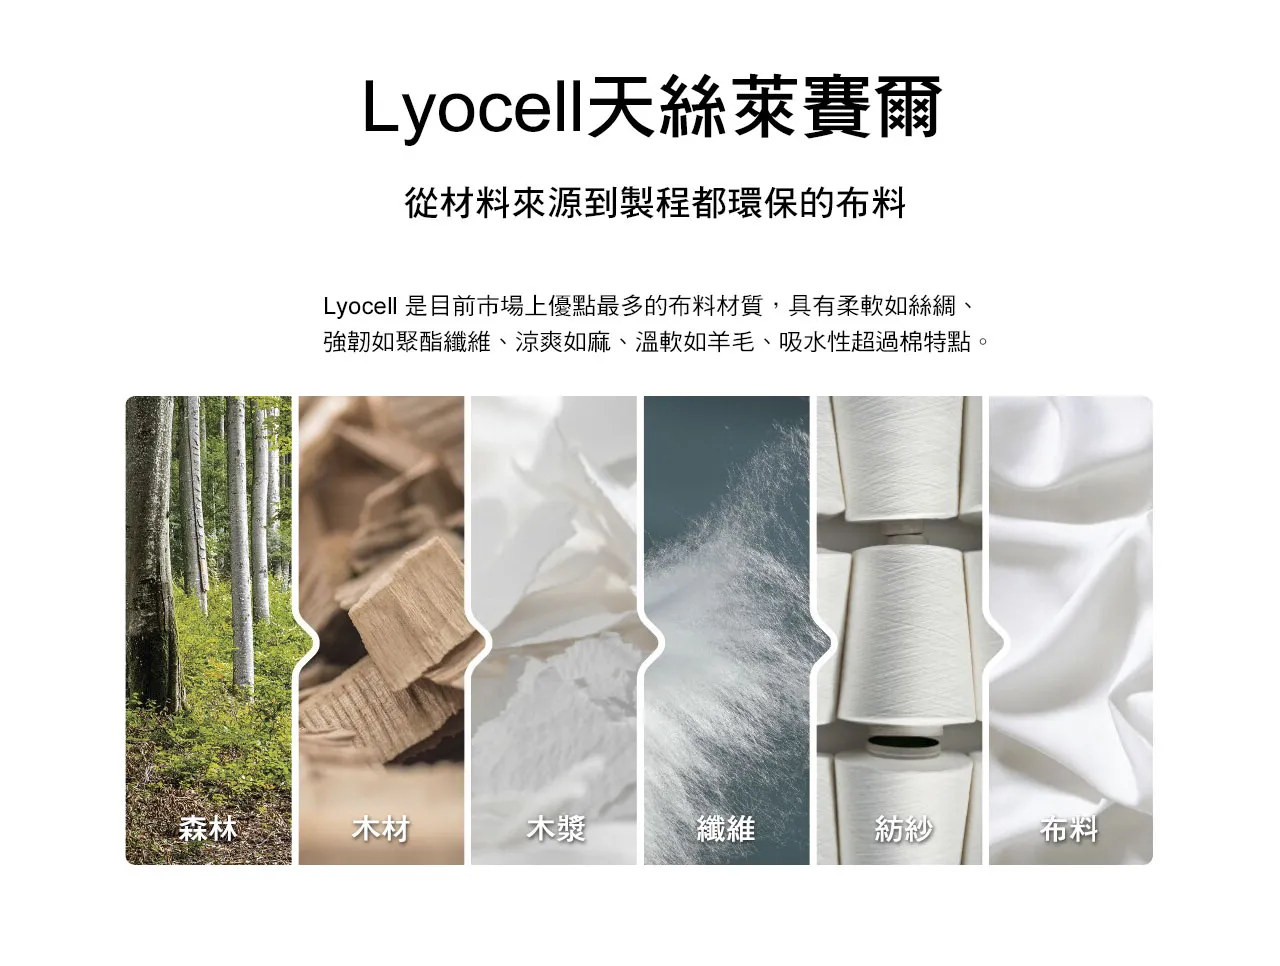 Lyocell天絲萊賽爾，從材料來源到製程都環保的布料，Lyocell 是目前市場上優點最多的布料材質，具有柔軟如絲綢、強韌如聚酯纖維、涼爽如麻、溫軟如羊毛、吸水性超過棉特點。